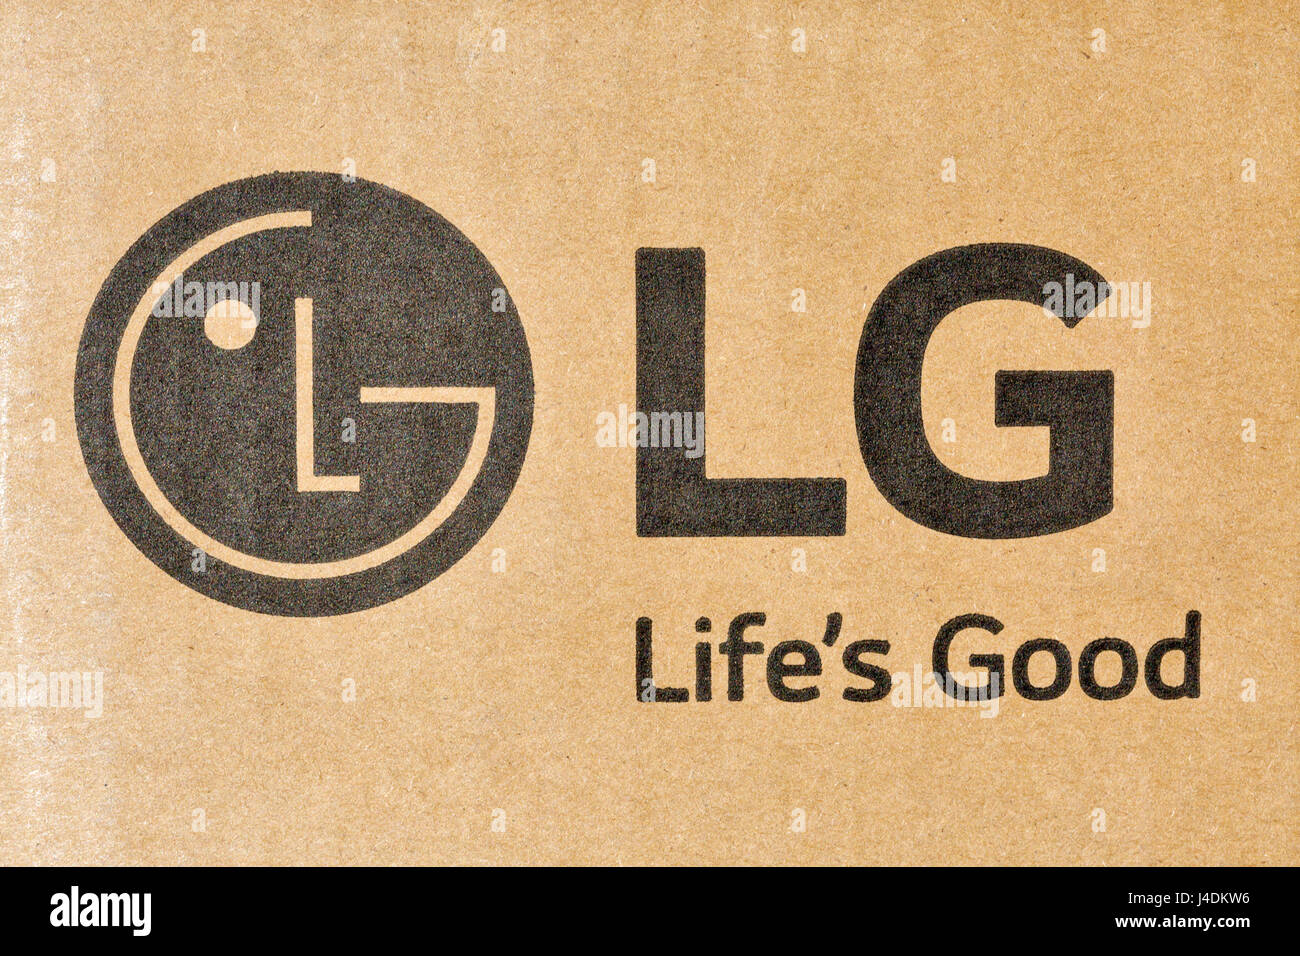 KIEV, UKRAINE - APRIL 27, 2017: LG company logo on display carton box closeup. LG is a South Korean multinational conglomerate corporation. Stock Photo